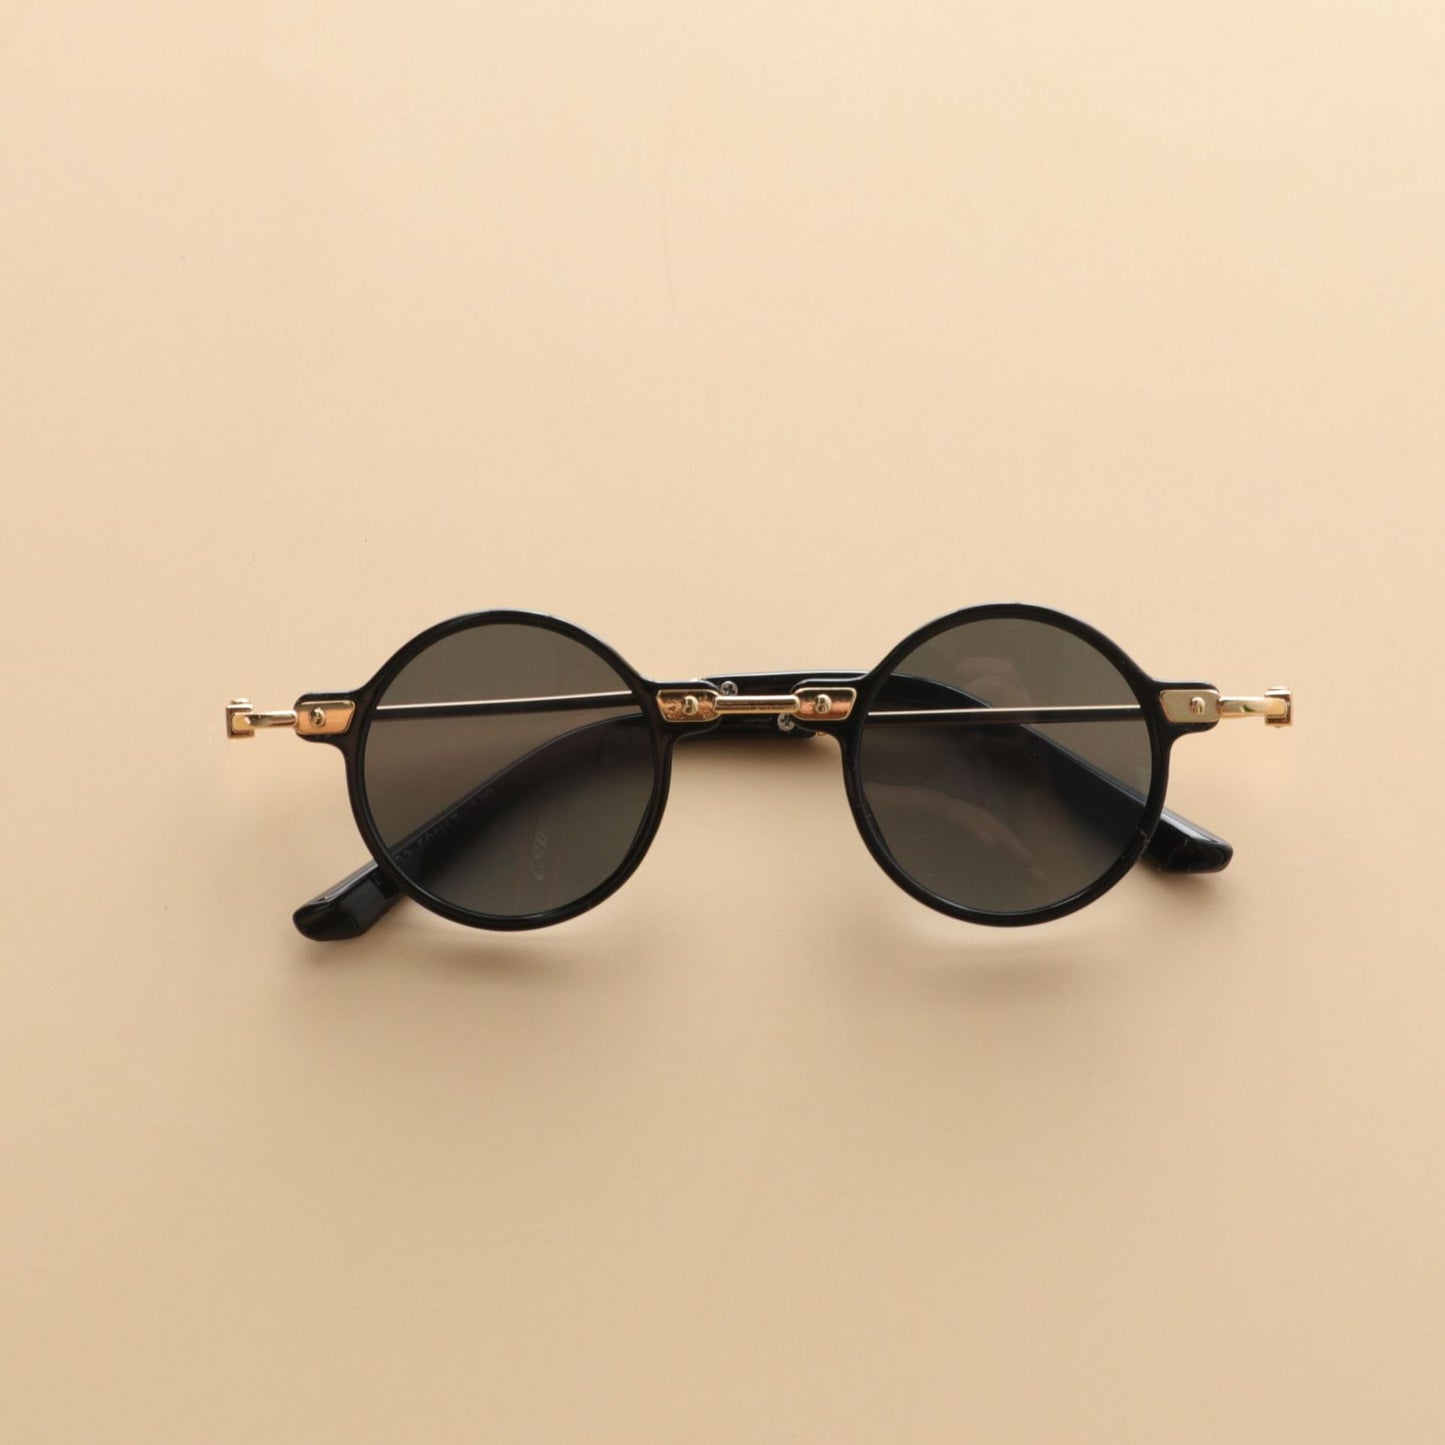 Kids Small Frame Design Vintage Style Metal Sunglasses